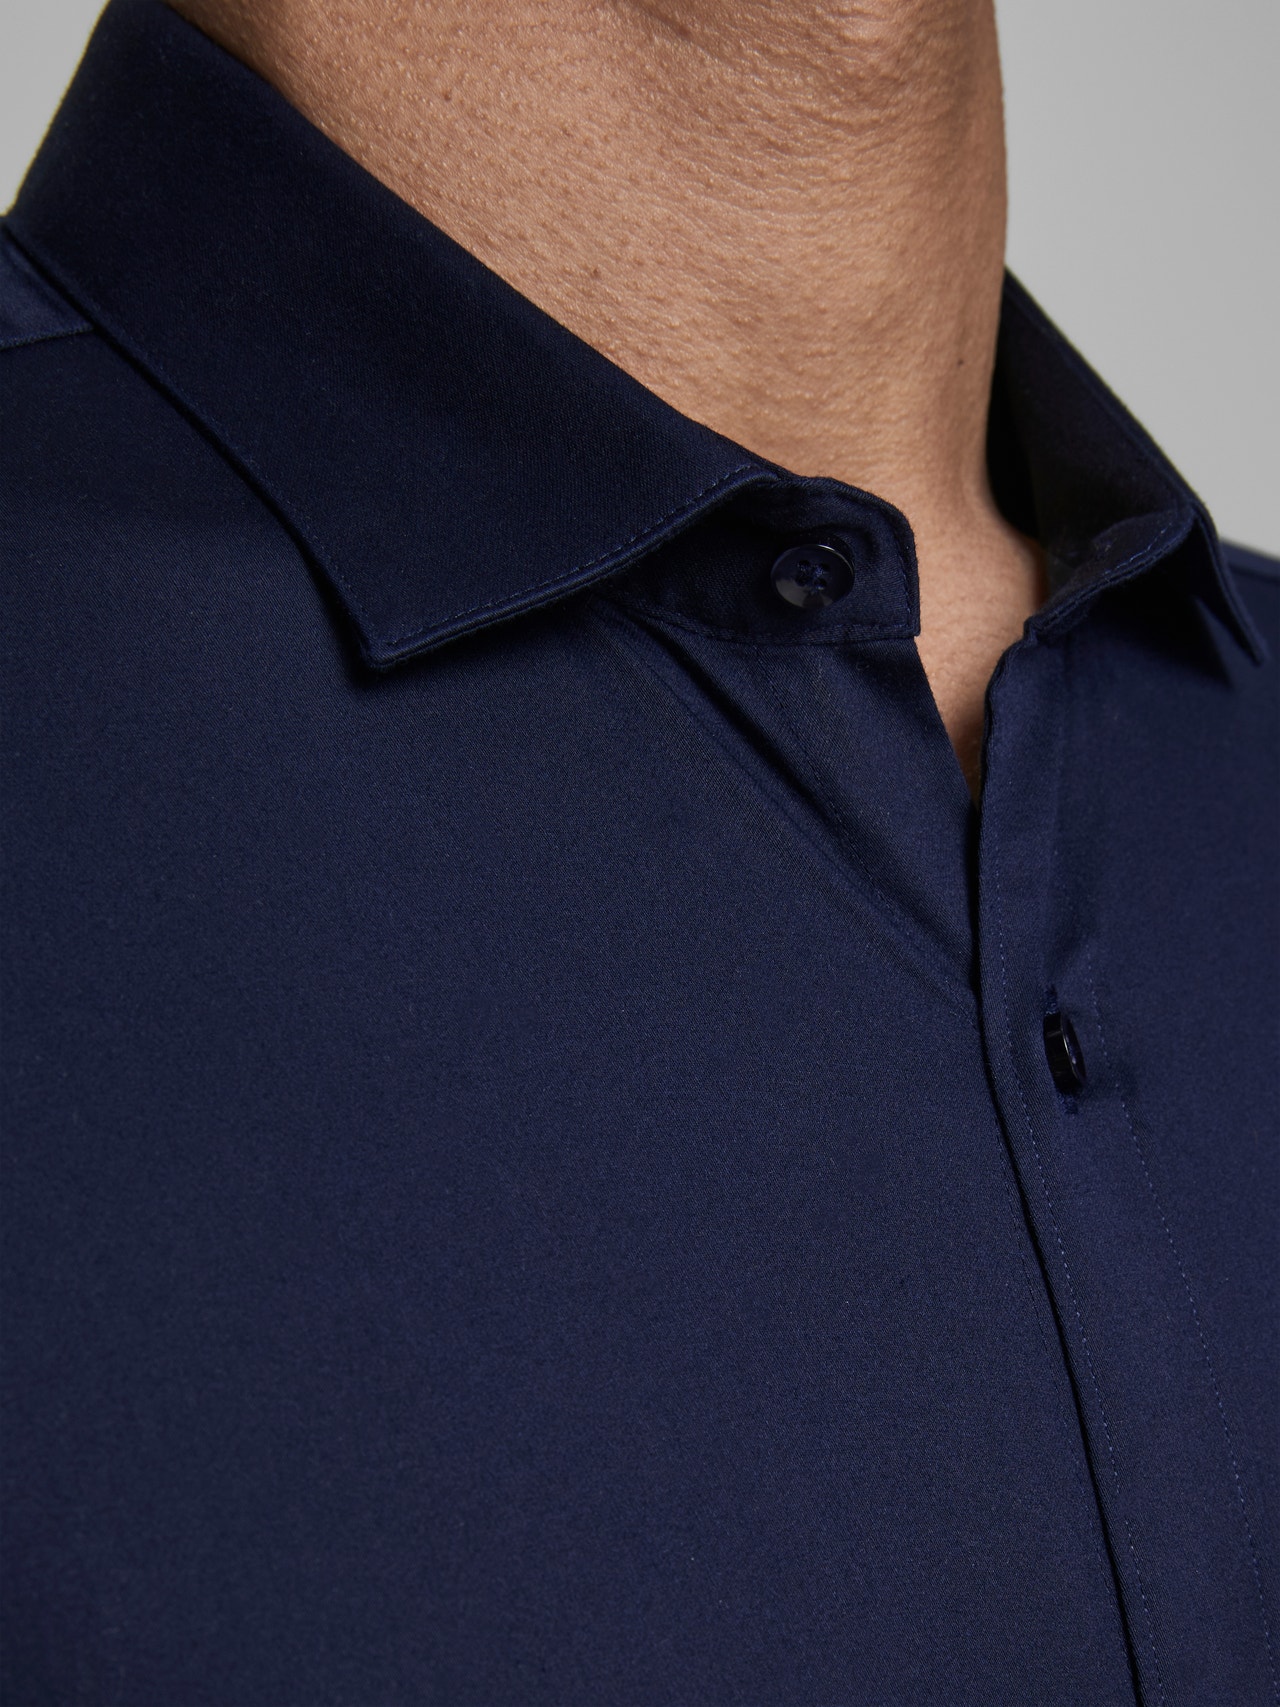 Jack & Jones Premium super slim fit stretch smart shirt in blue